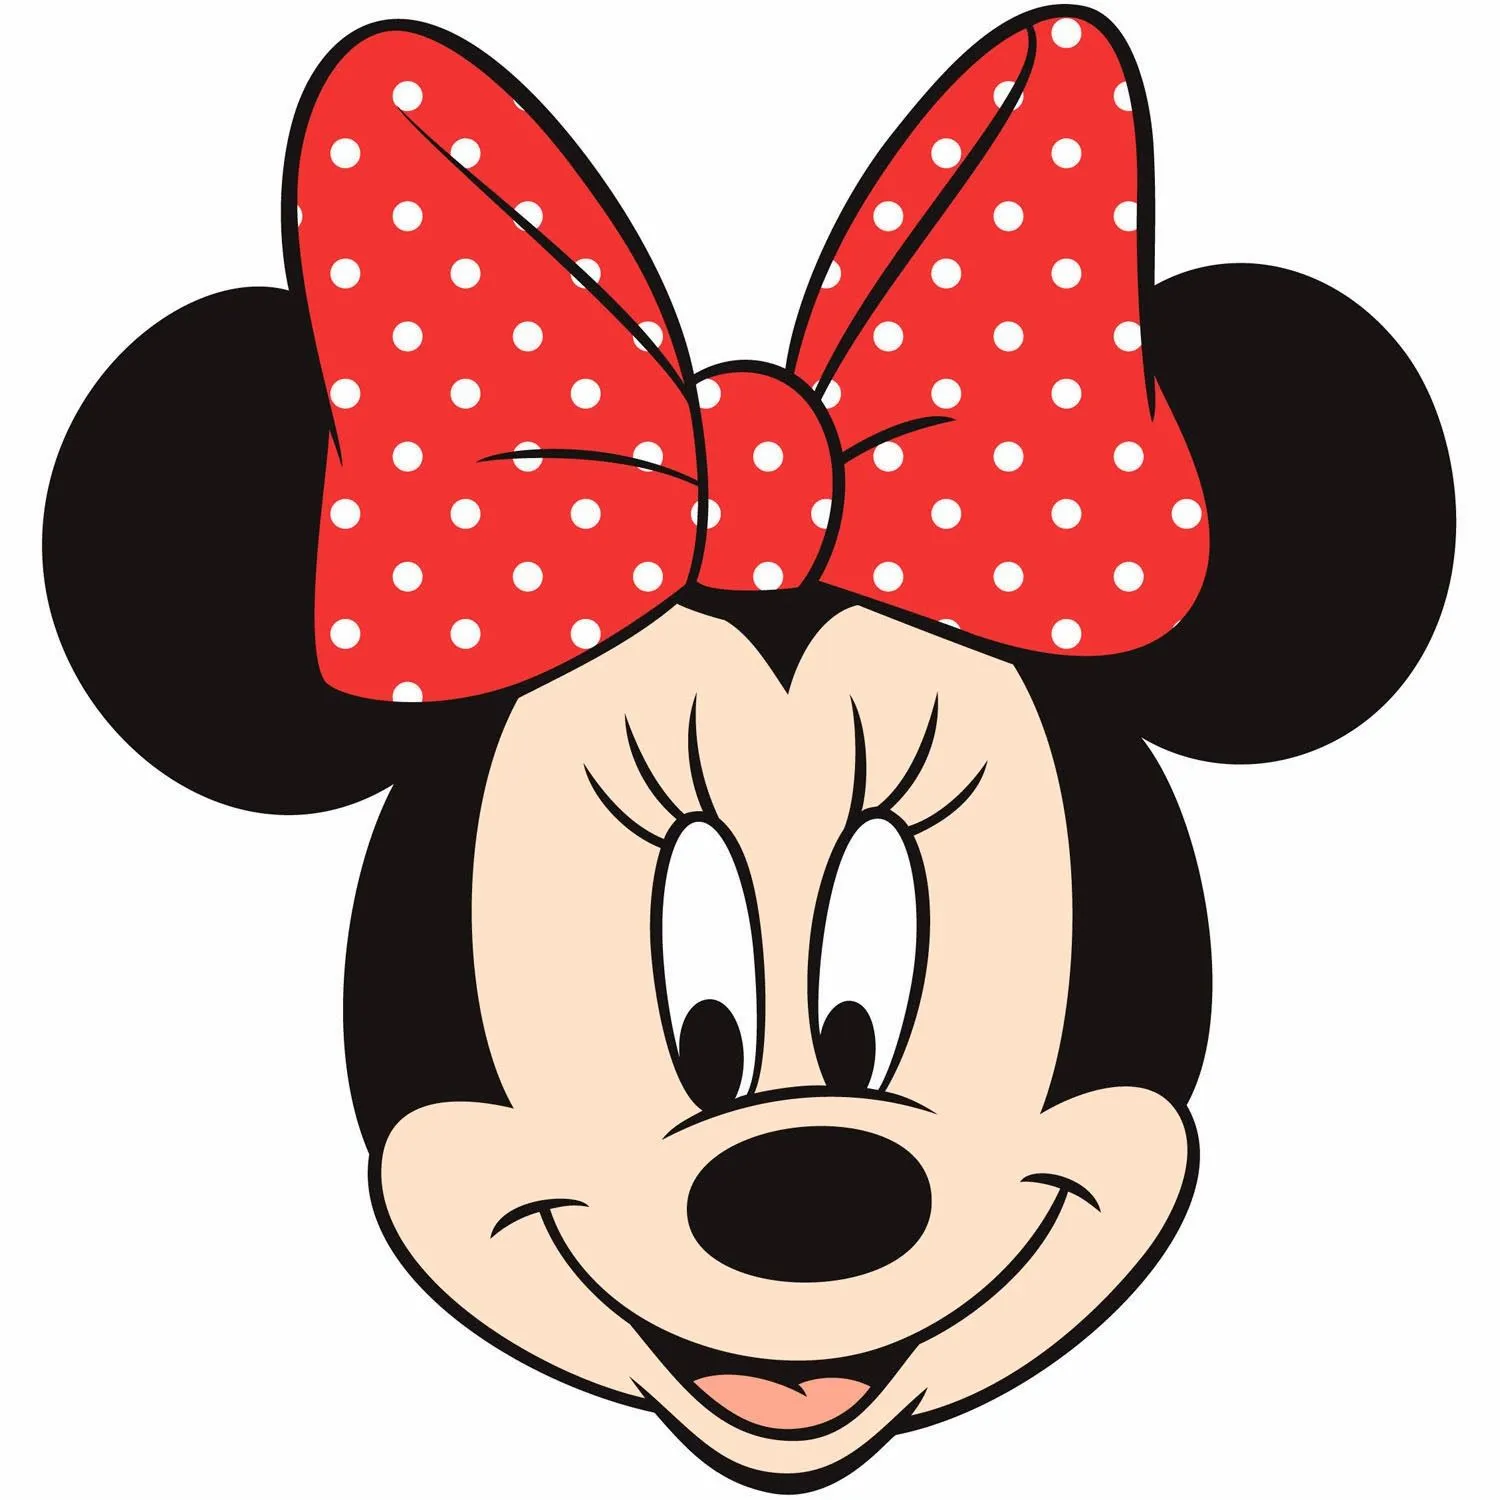 Minnie Mouse HD Wallpapers | Full Widescreen Desktop Wallpapers ...